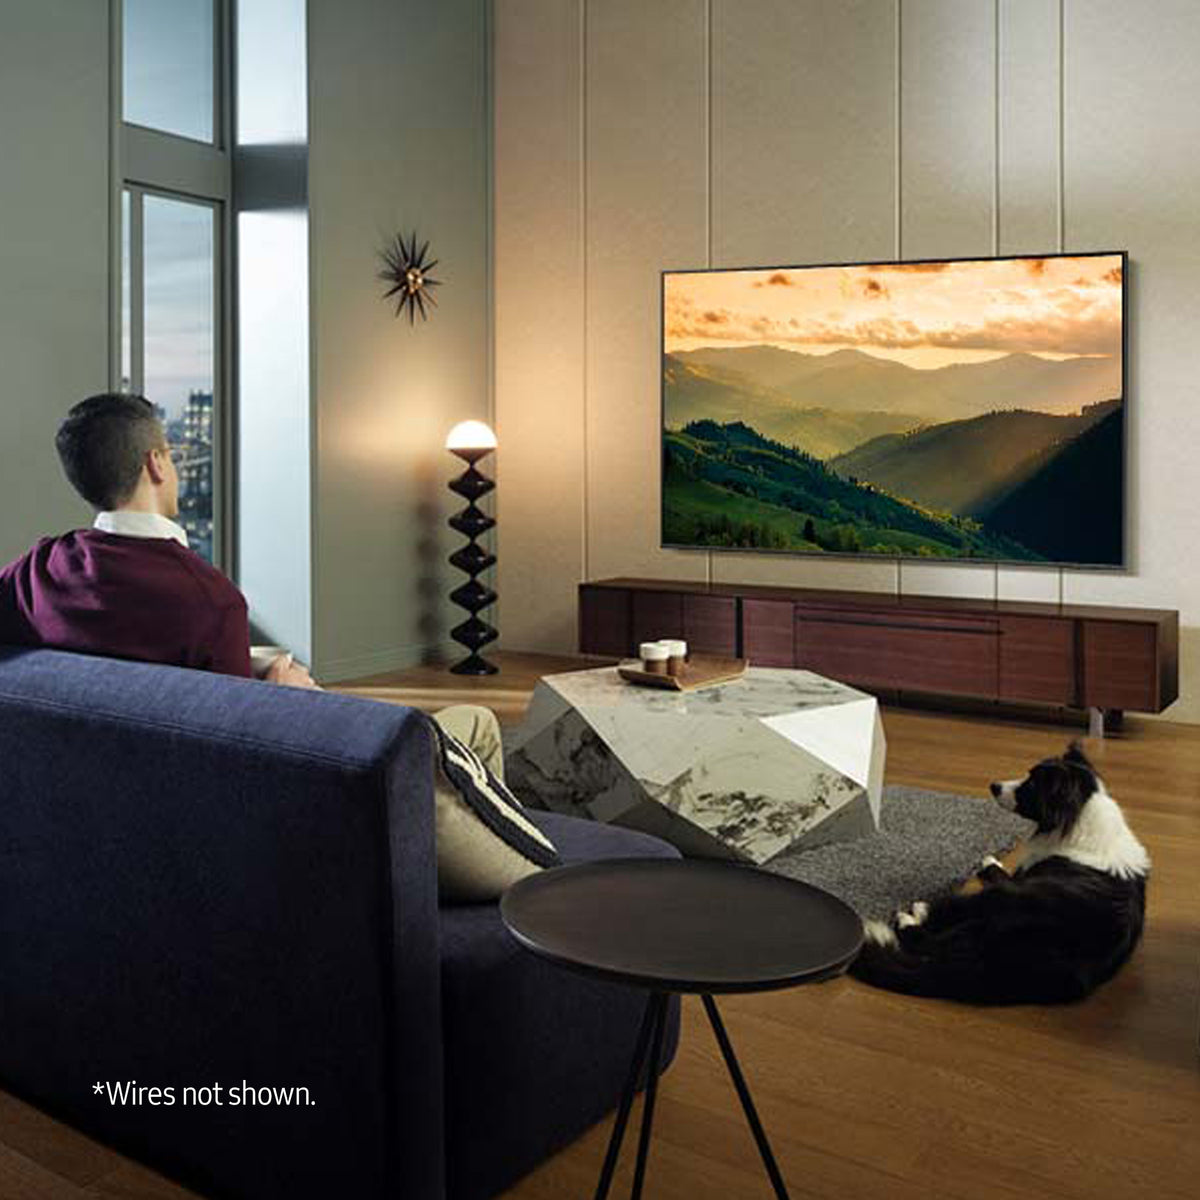 Samsung 50&quot; Q60C 4K HDR QLED Smart TV - Black | QE50Q60CAUXXU from Samsung - DID Electrical